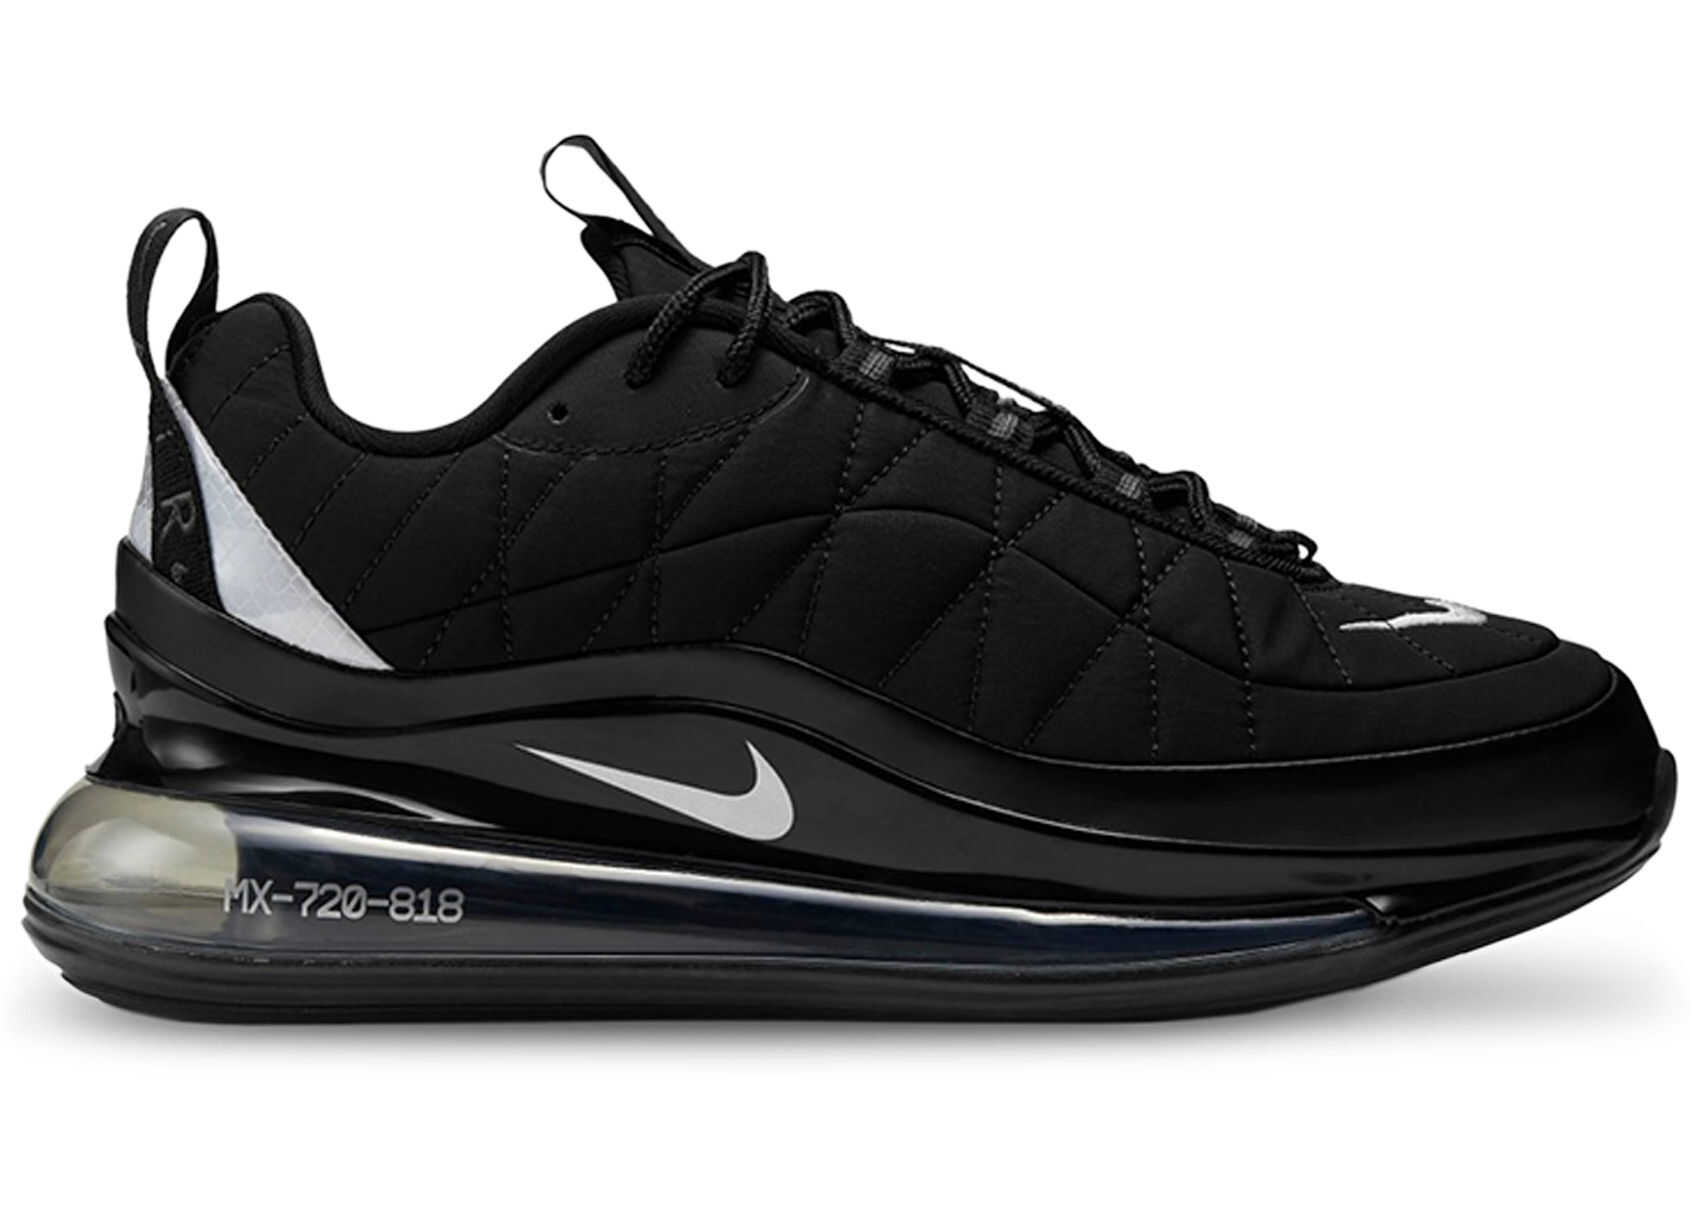 Nike Mx-720-818* BLACK